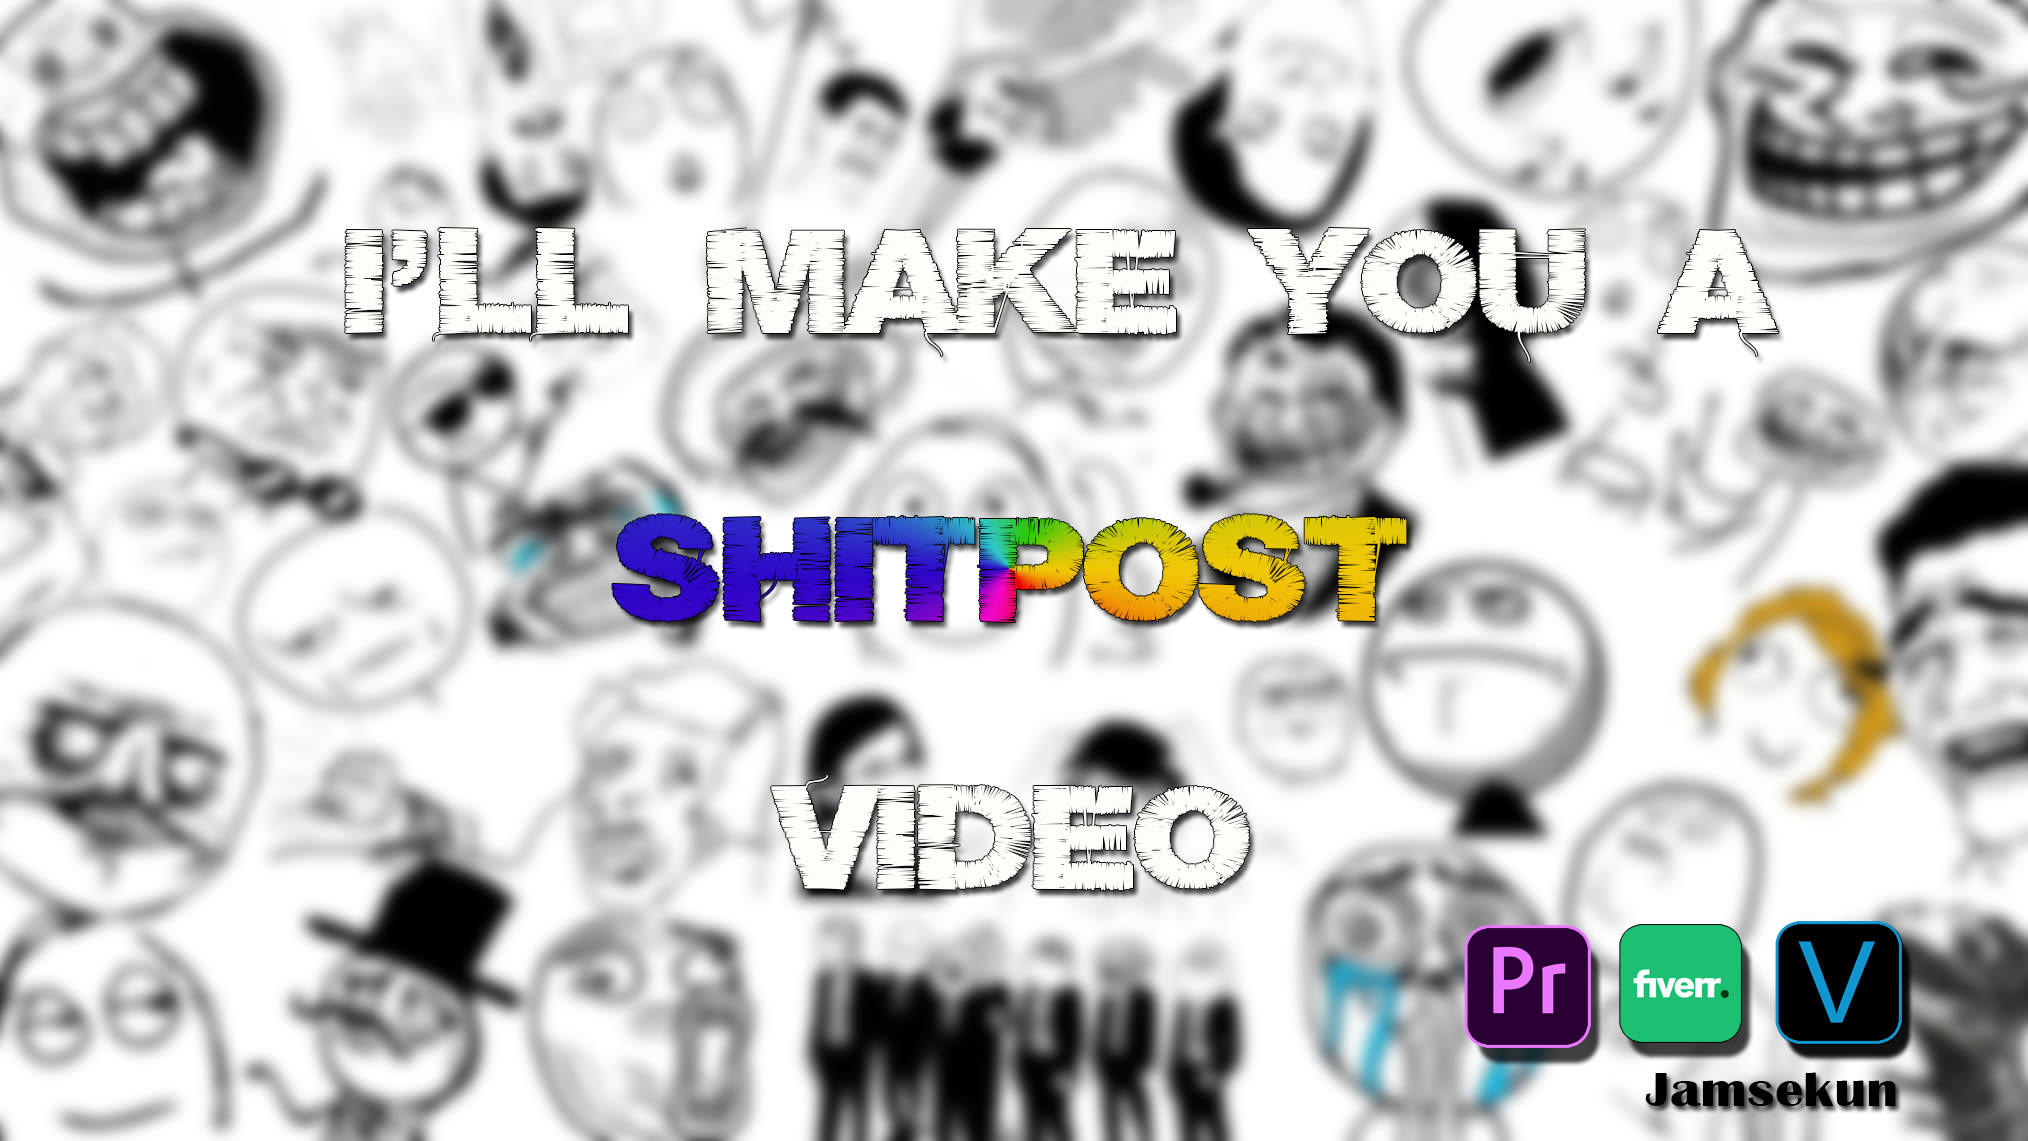 Make memes, shitposts, and basic photoshop edits by Pepososeboso